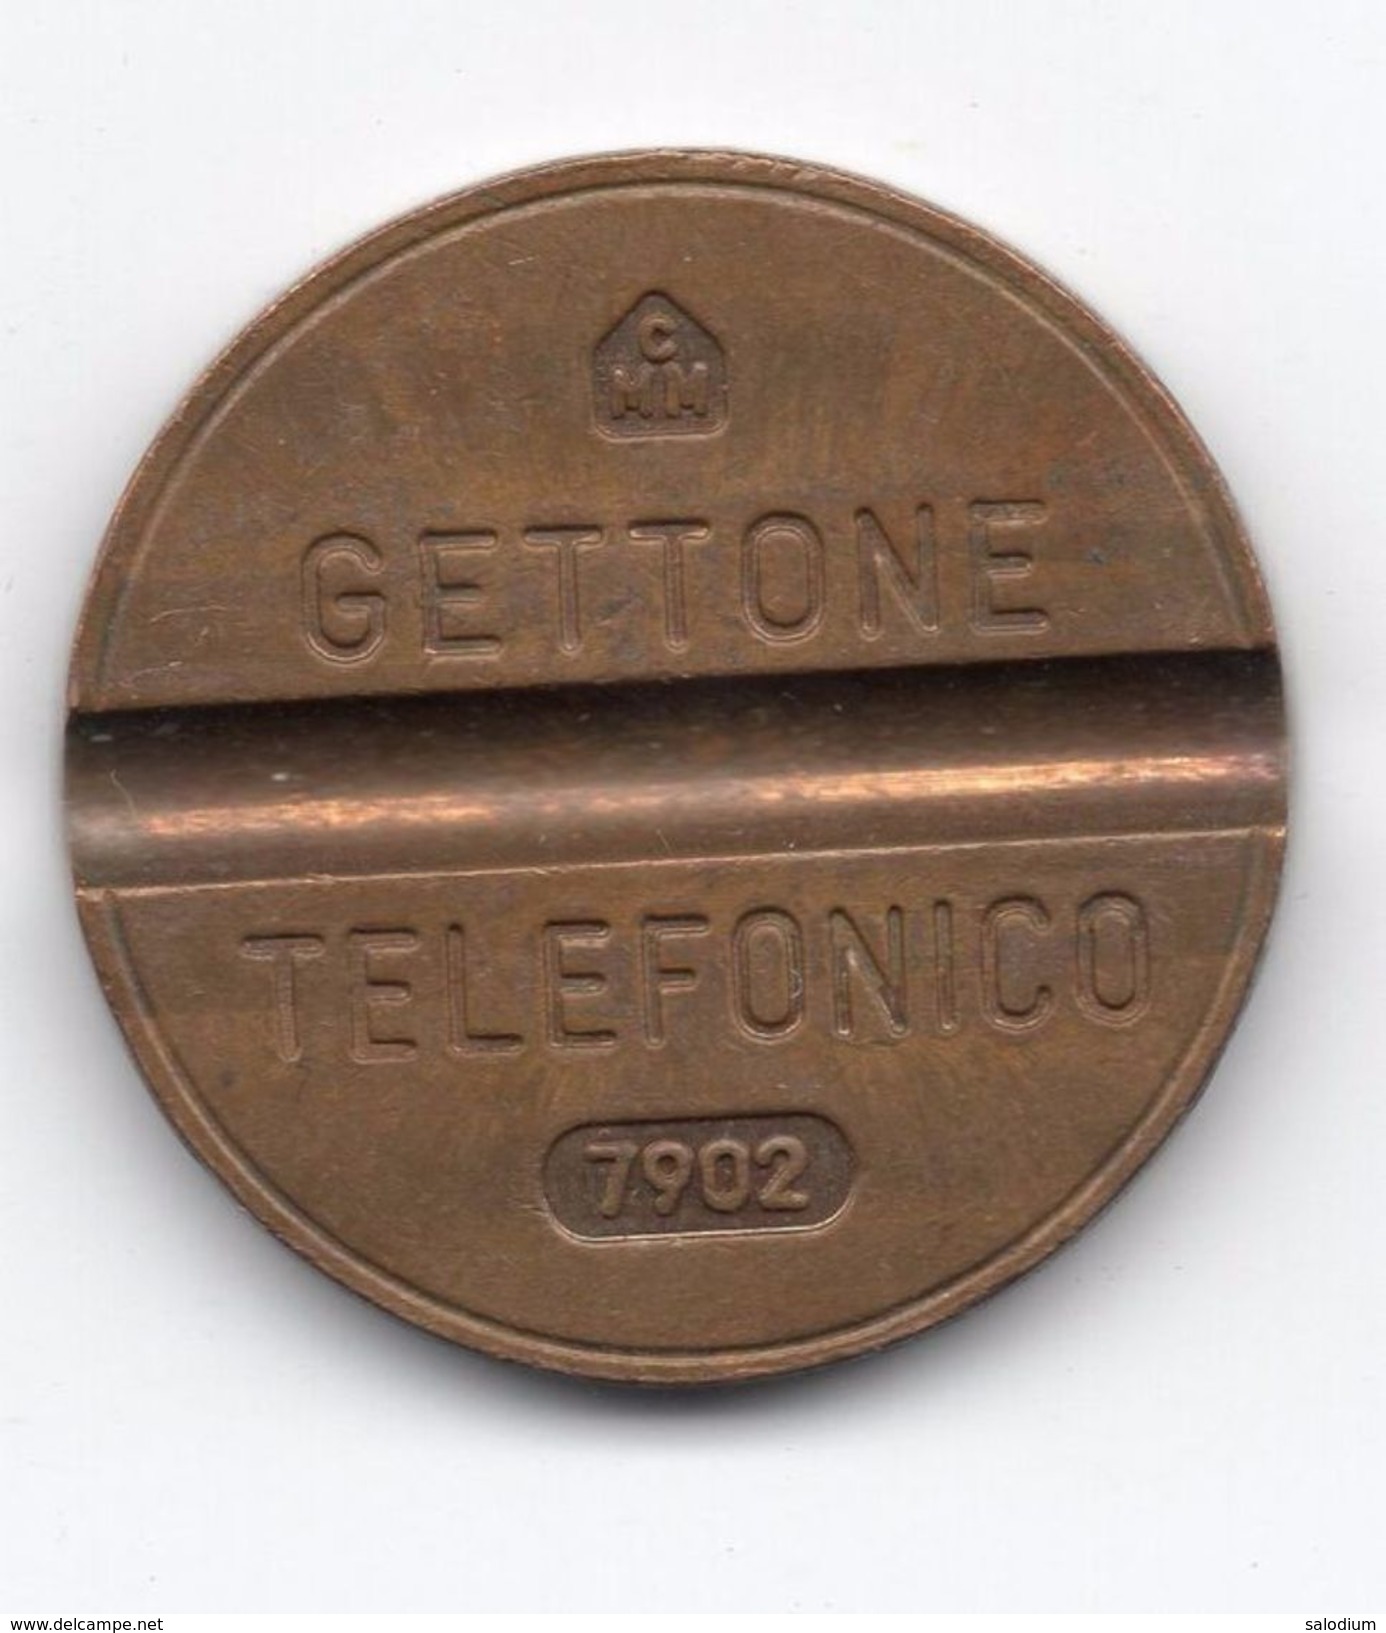 Gettone Telefonico 7902 Token Telephone - (Id-771) - Firma's